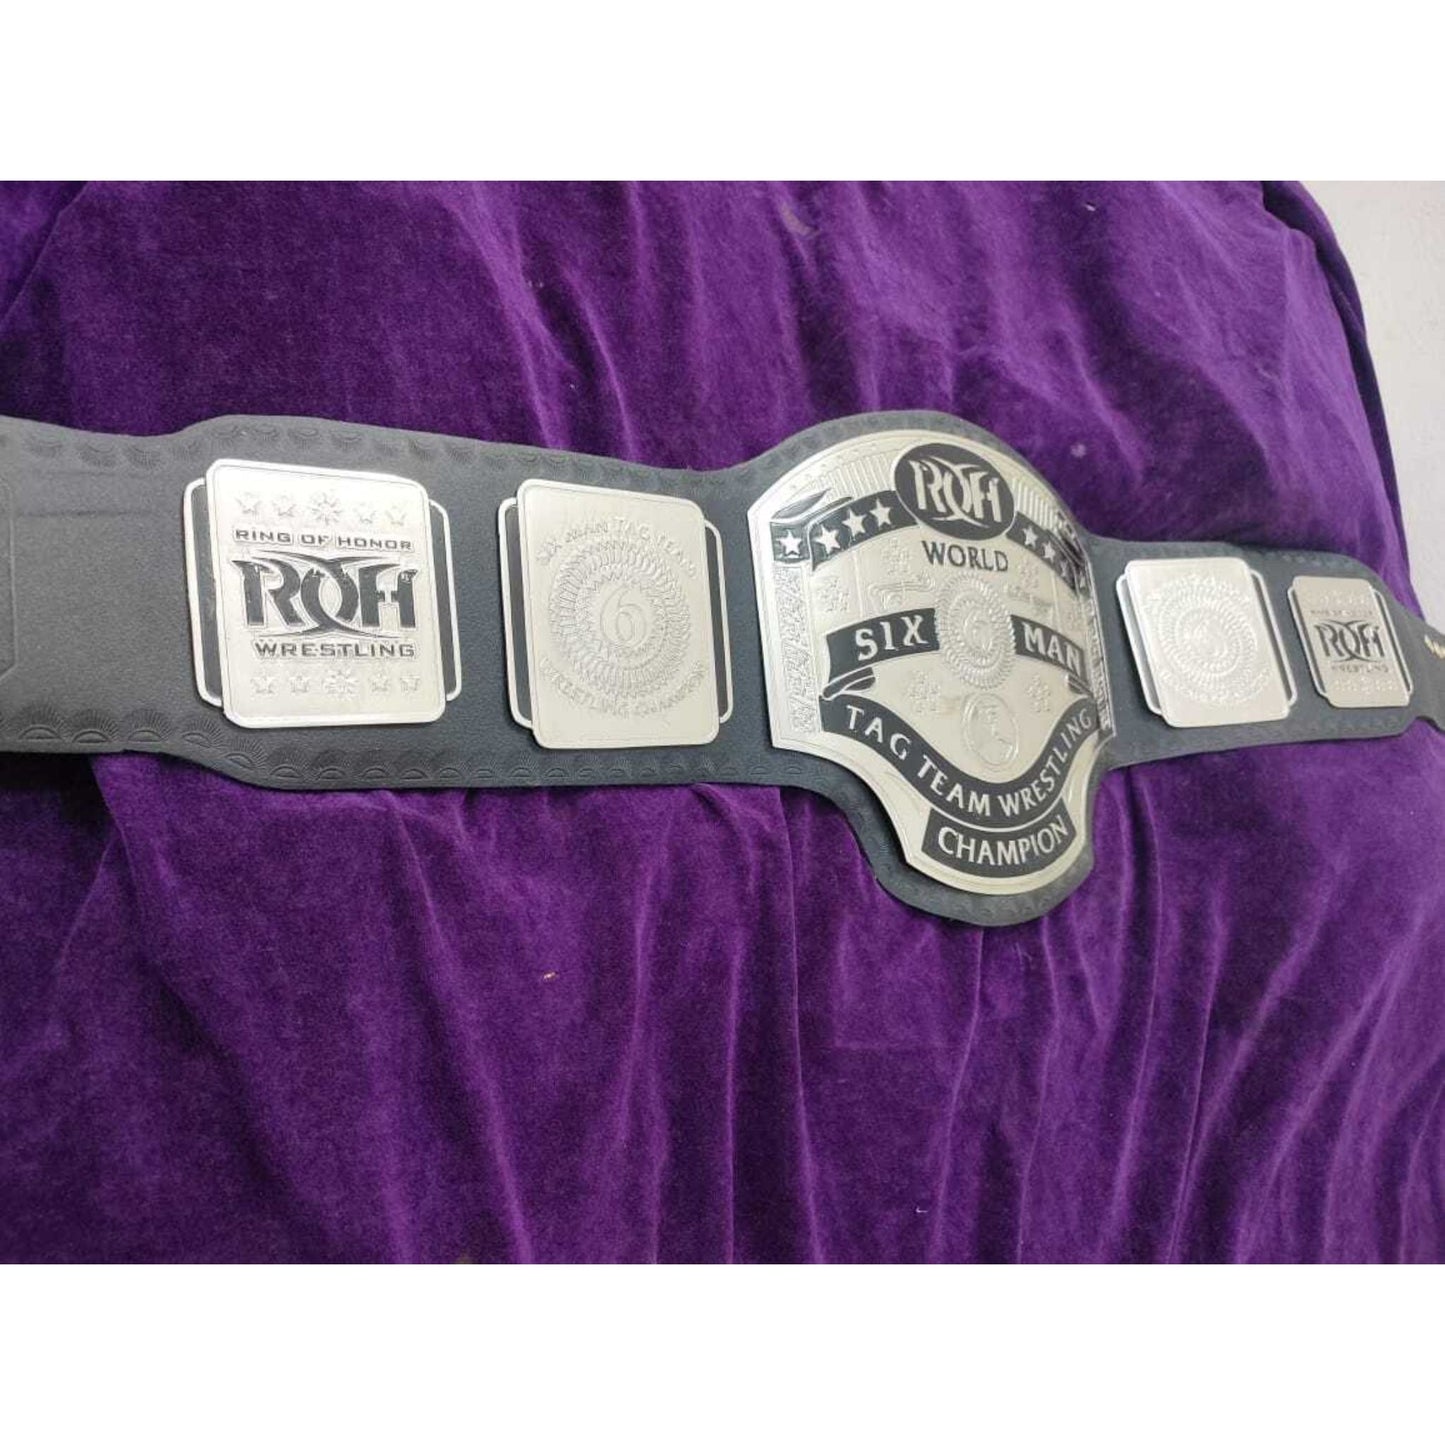 ROH Six Man Tag Team Championship Replica Title Belt